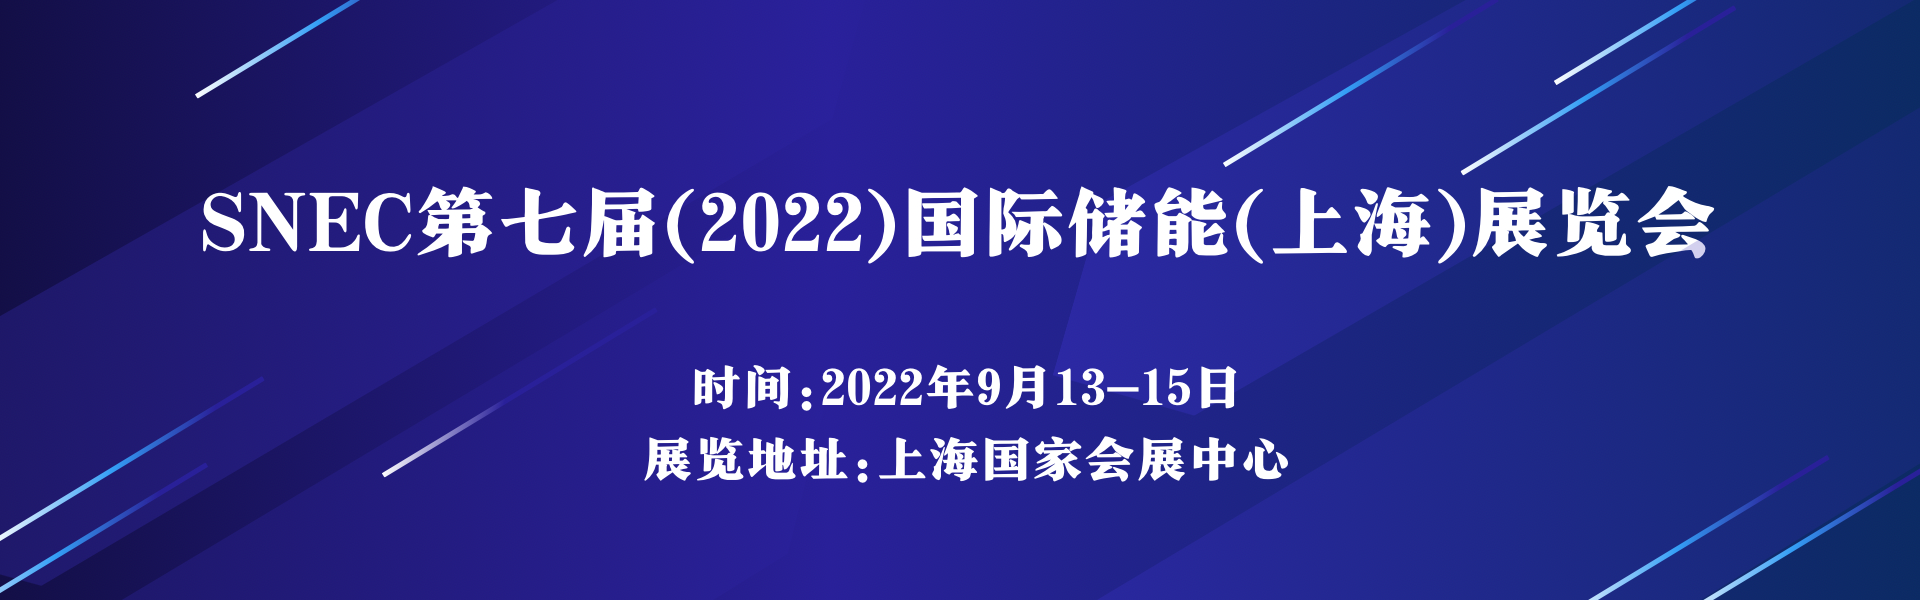 SNEC第七届(2022)国际储能(上海)技术大会